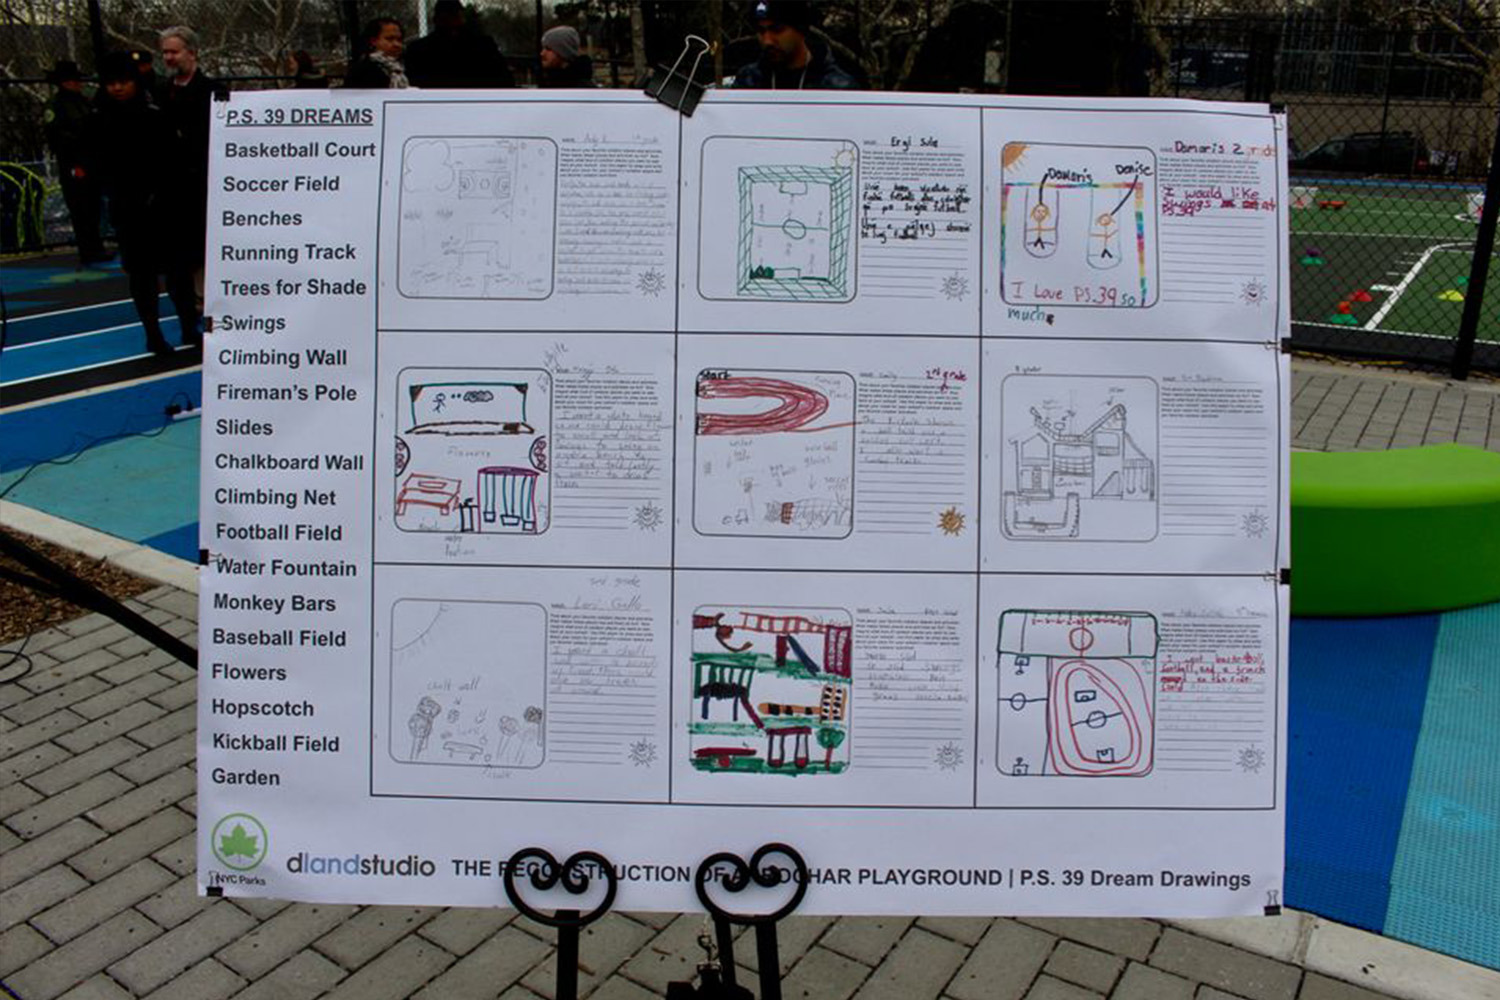 Community members' drawings of potential park layouts